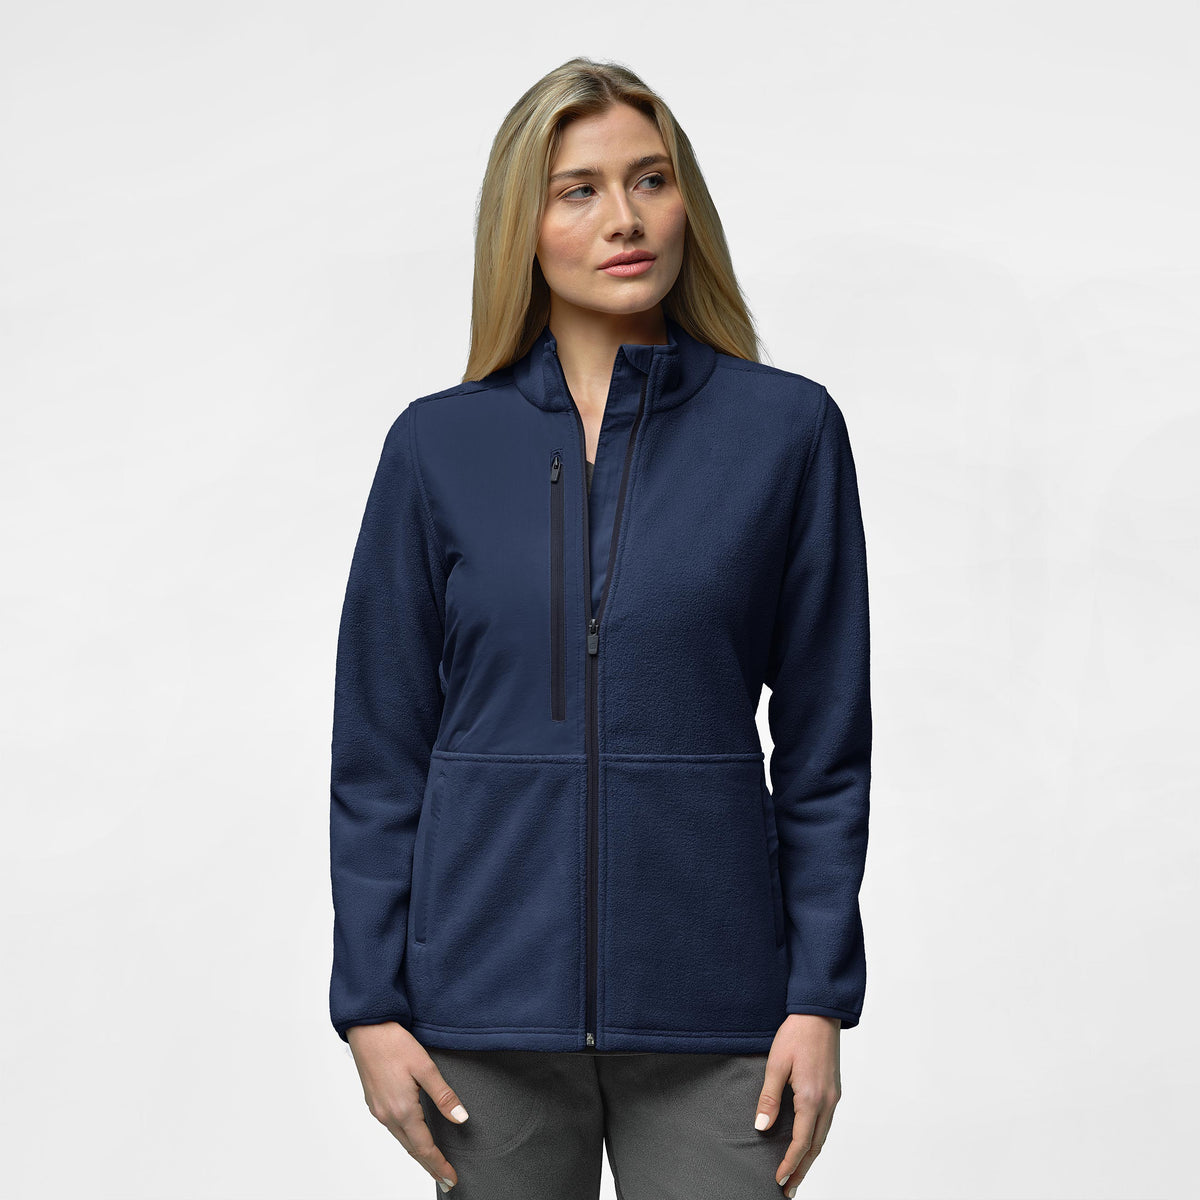 Slate Women's Micro Fleece Zip Jacket - Navy